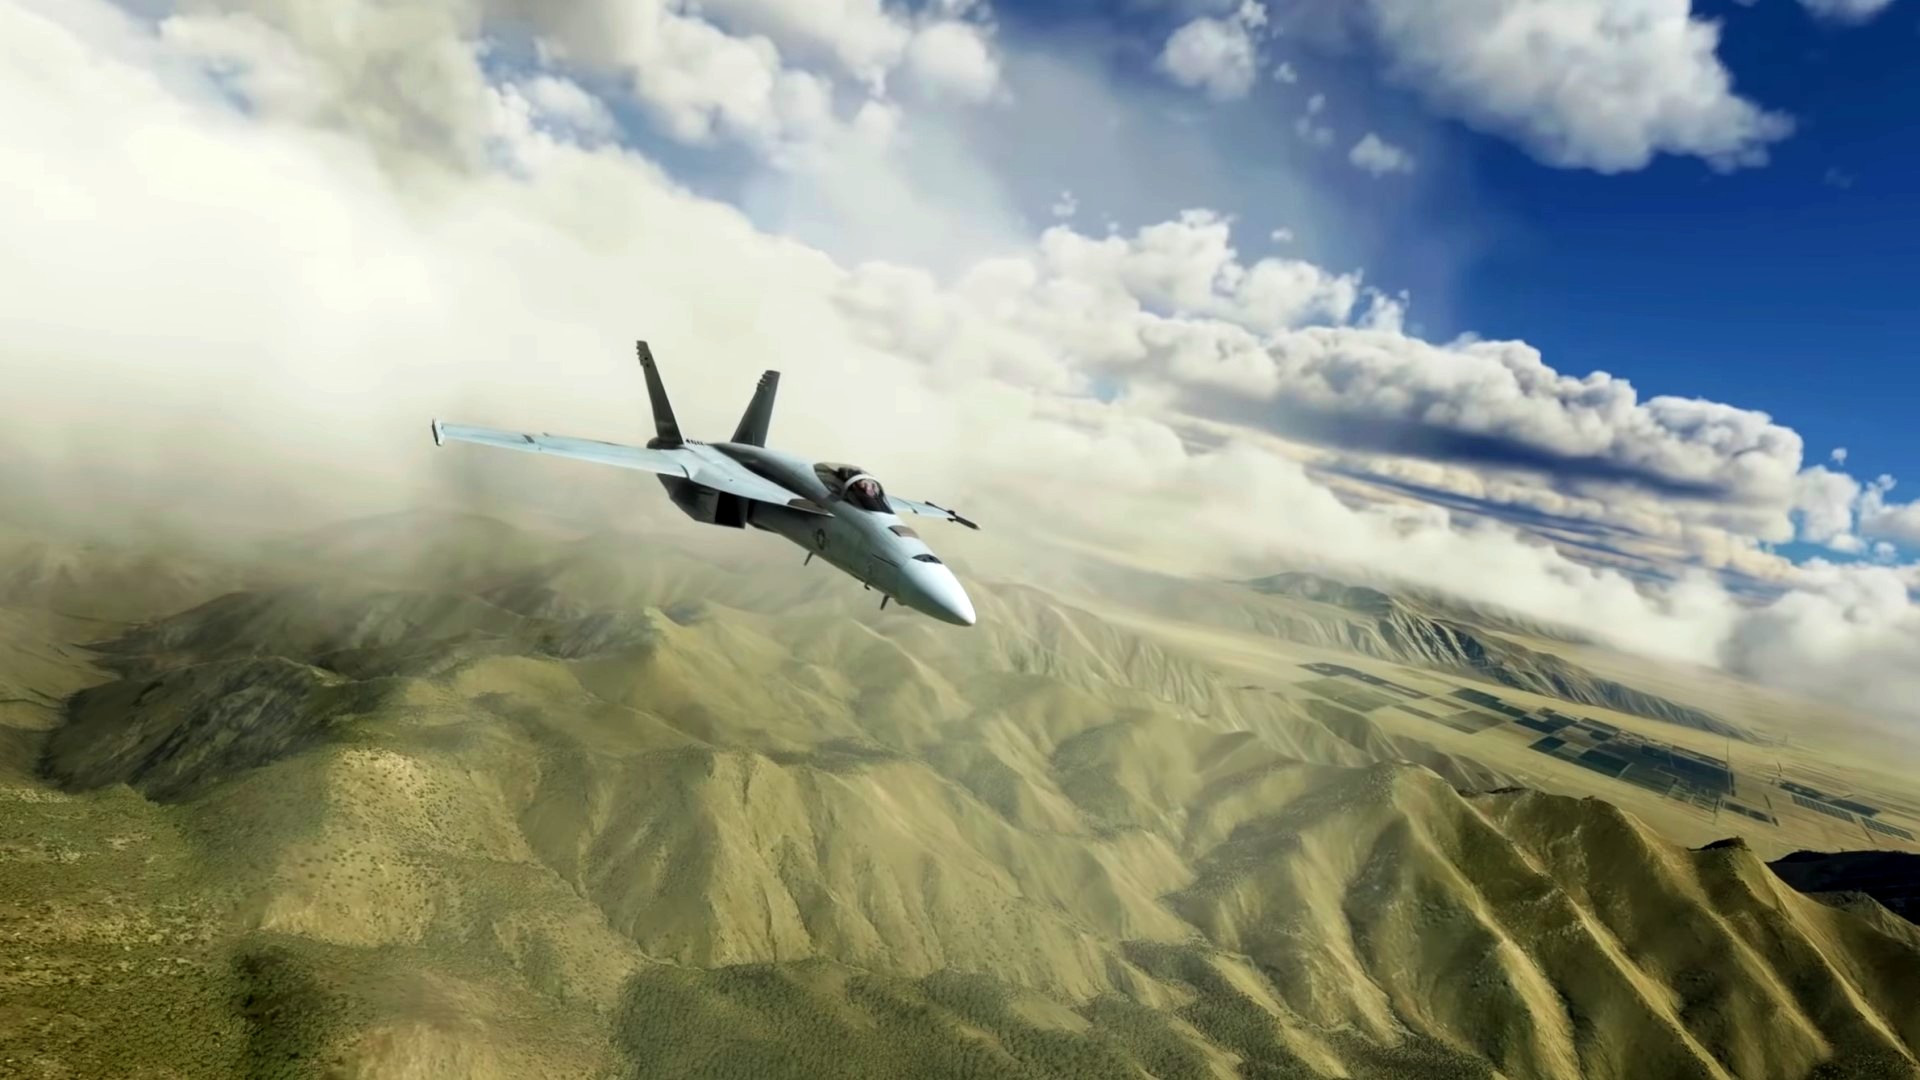 Flight Simulator sim update 9 adds new supersonic effects